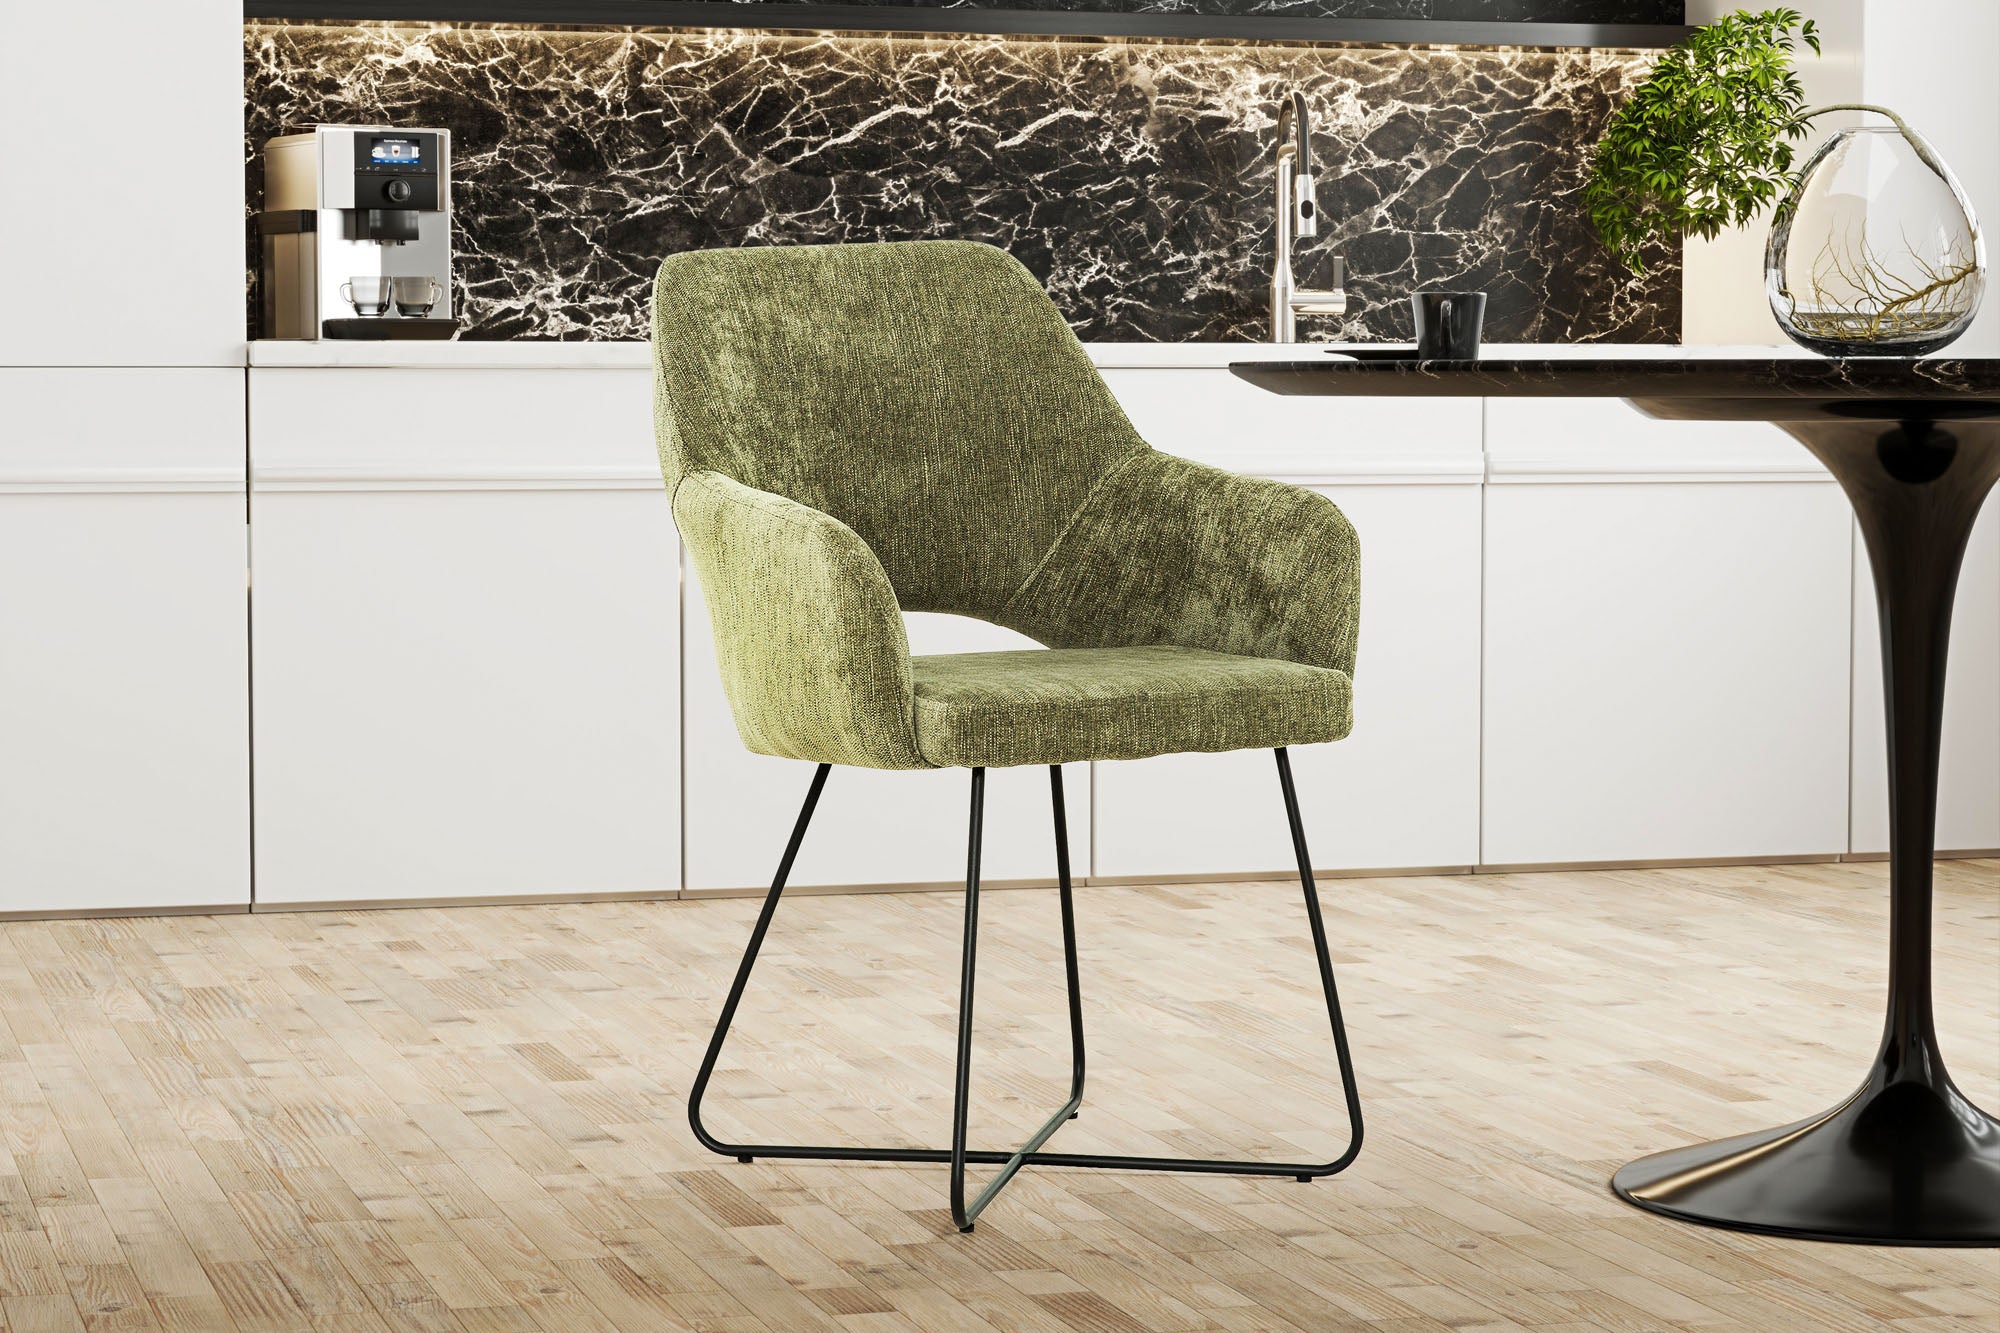 Willa Green Dining Chair - MJM Furniture